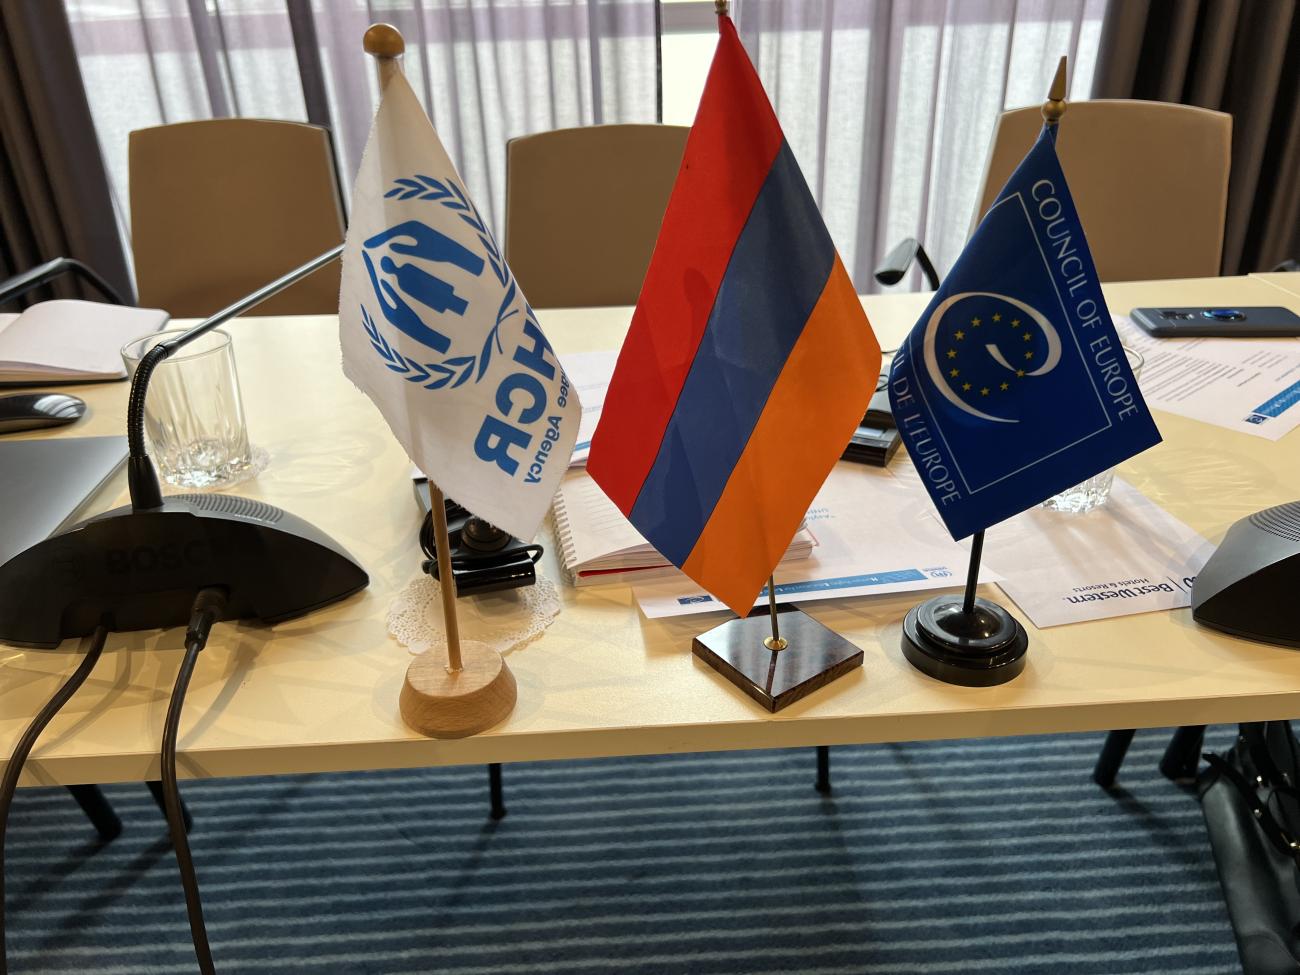 Flags of Armenia, UNHCR and CoE.